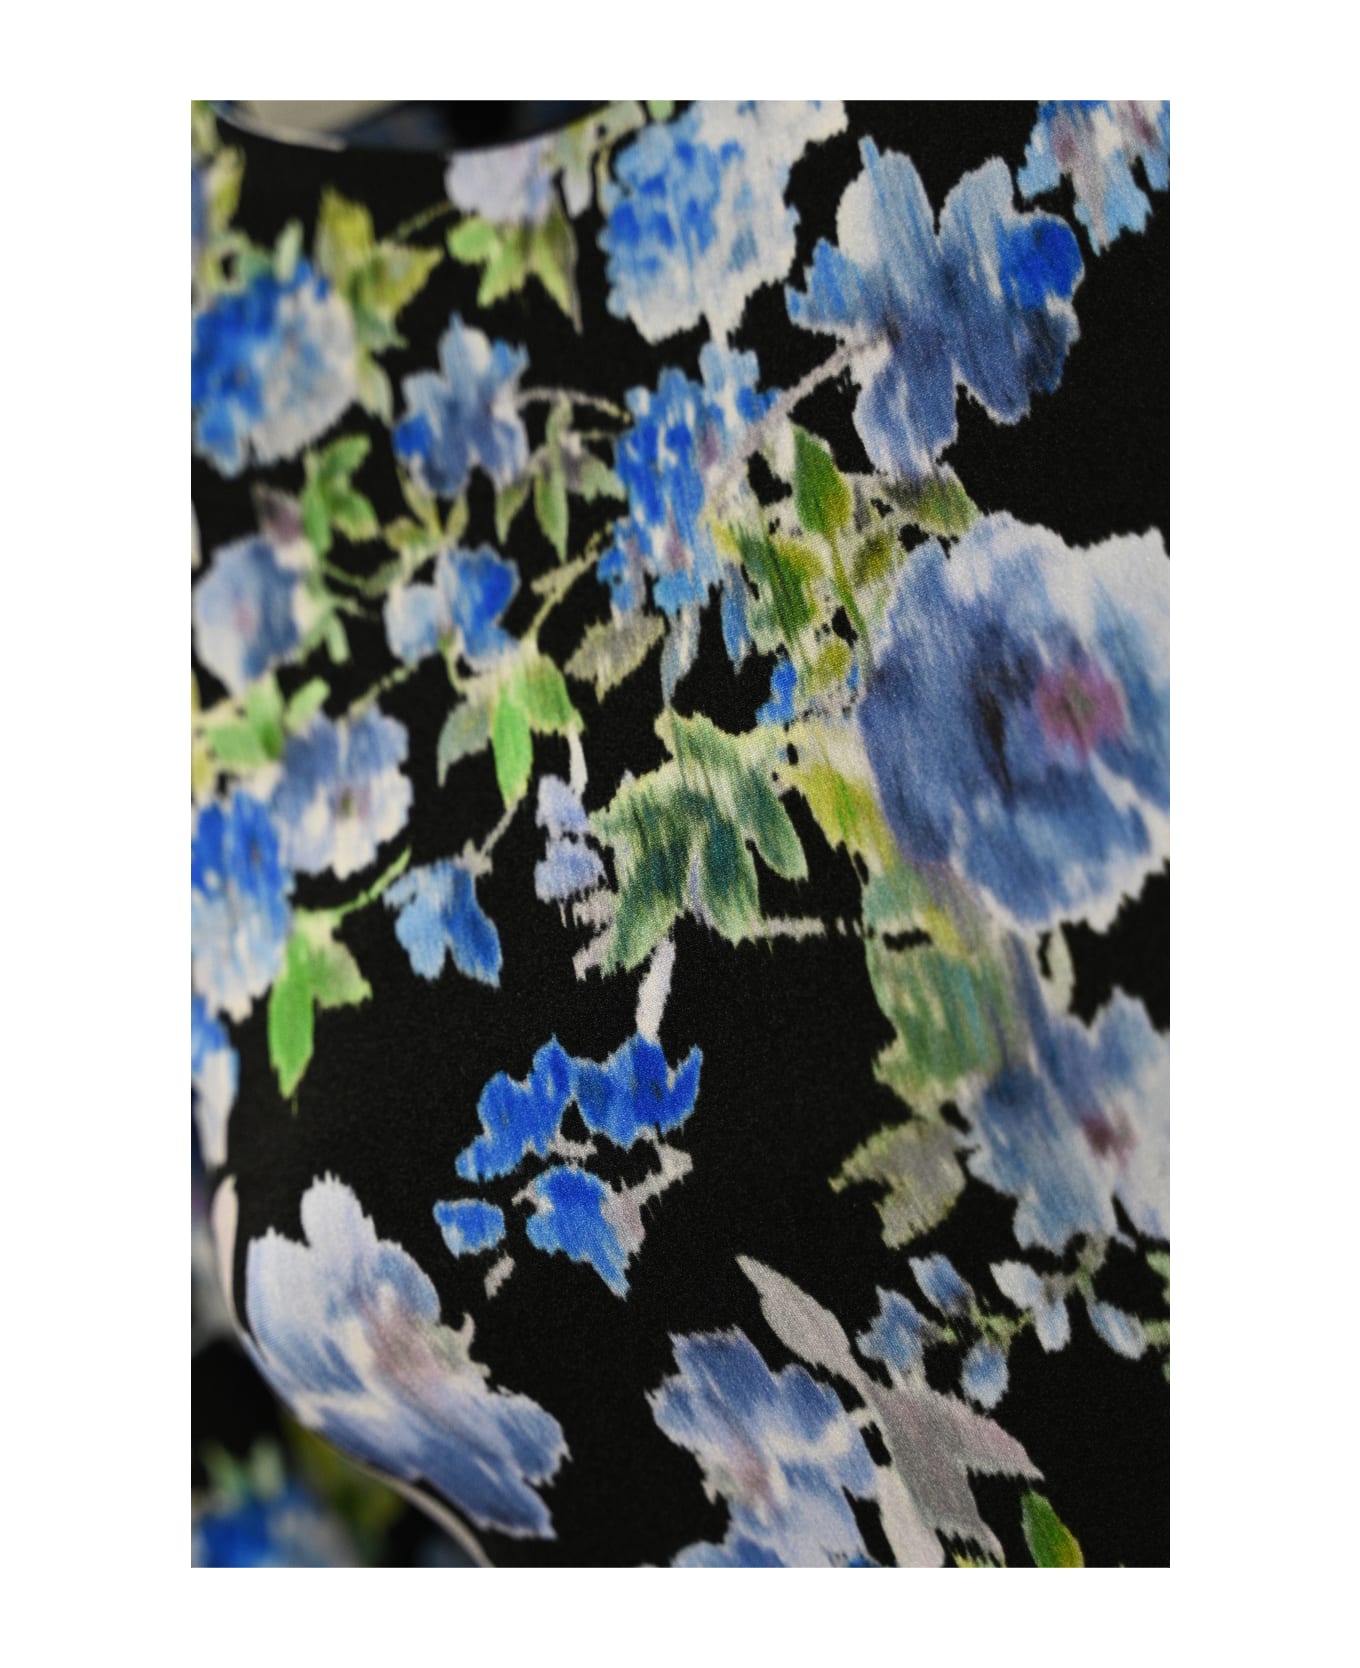 Philosophy di Lorenzo Serafini Floral Print Sweater - Nero/blu